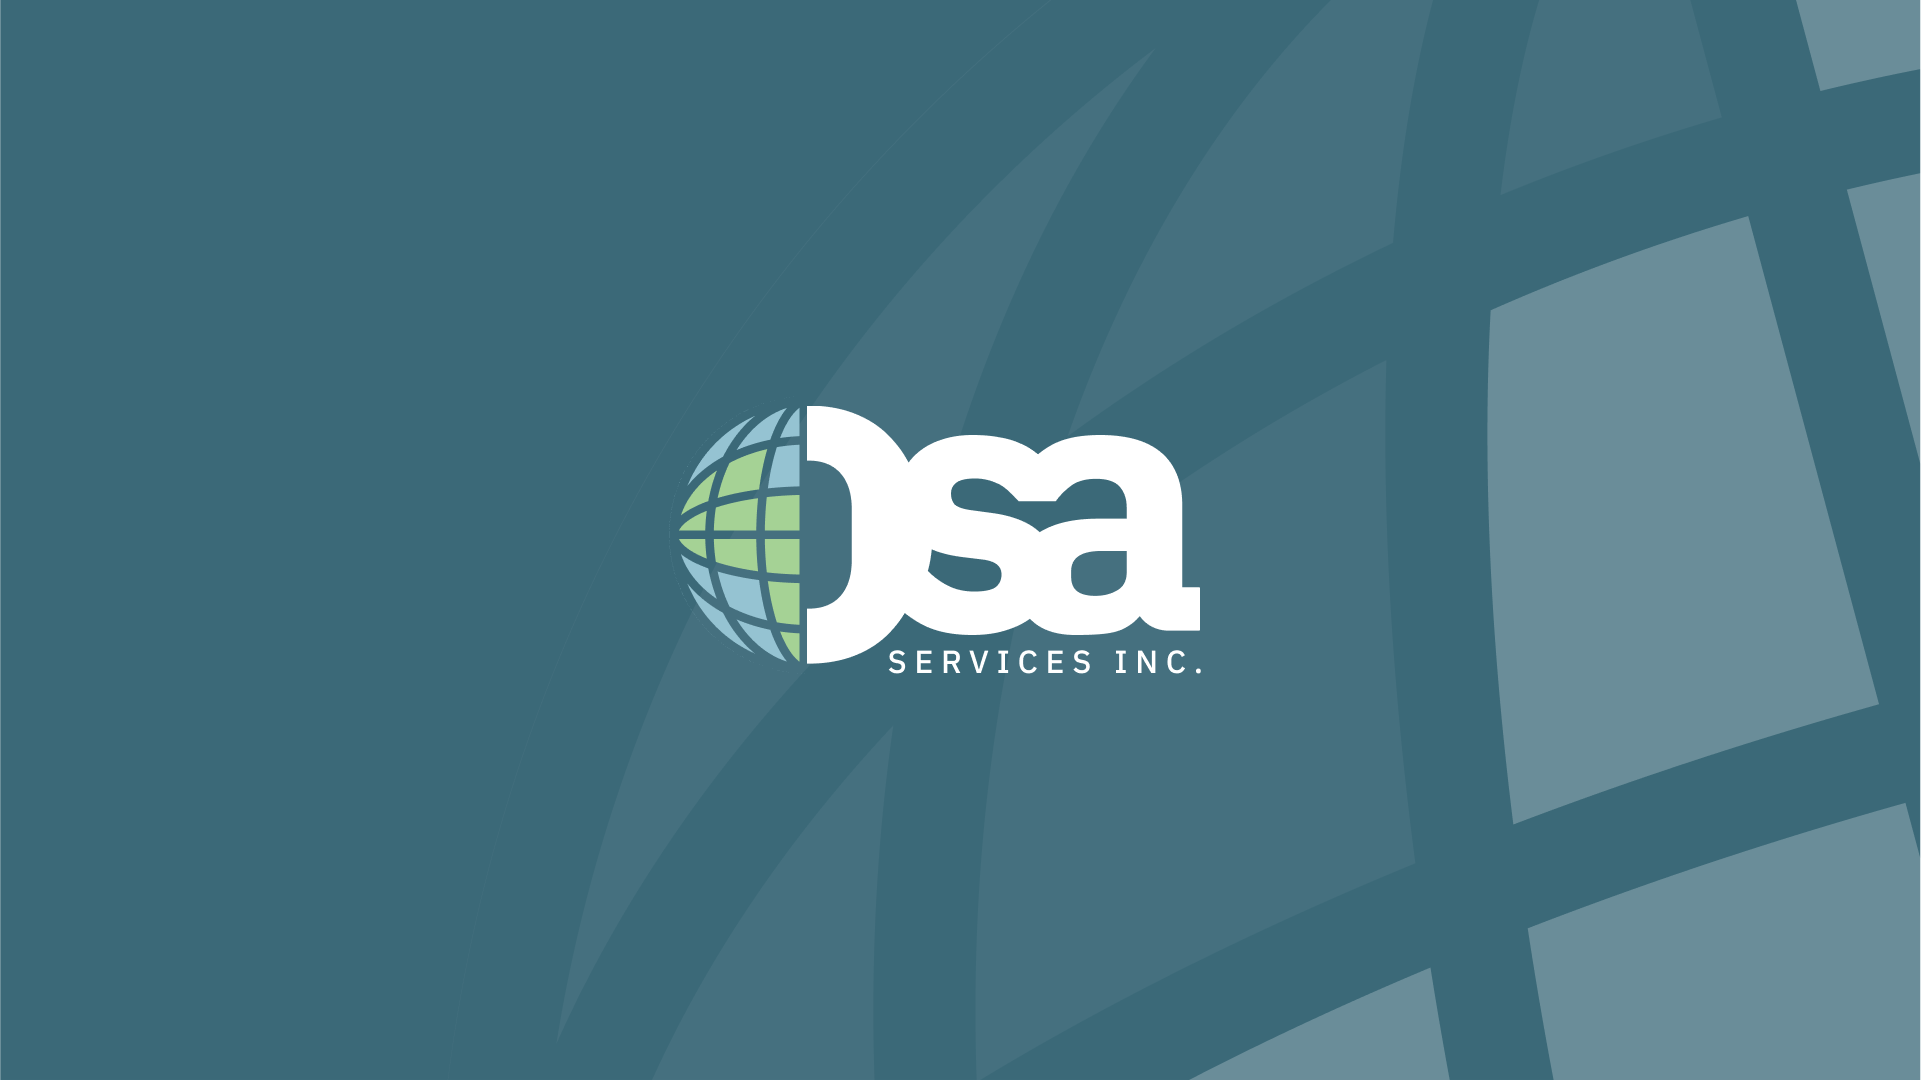 OSA Services, Inc. 1773 Dorchester Ave #2A, Dorchester Center Massachusetts 02124